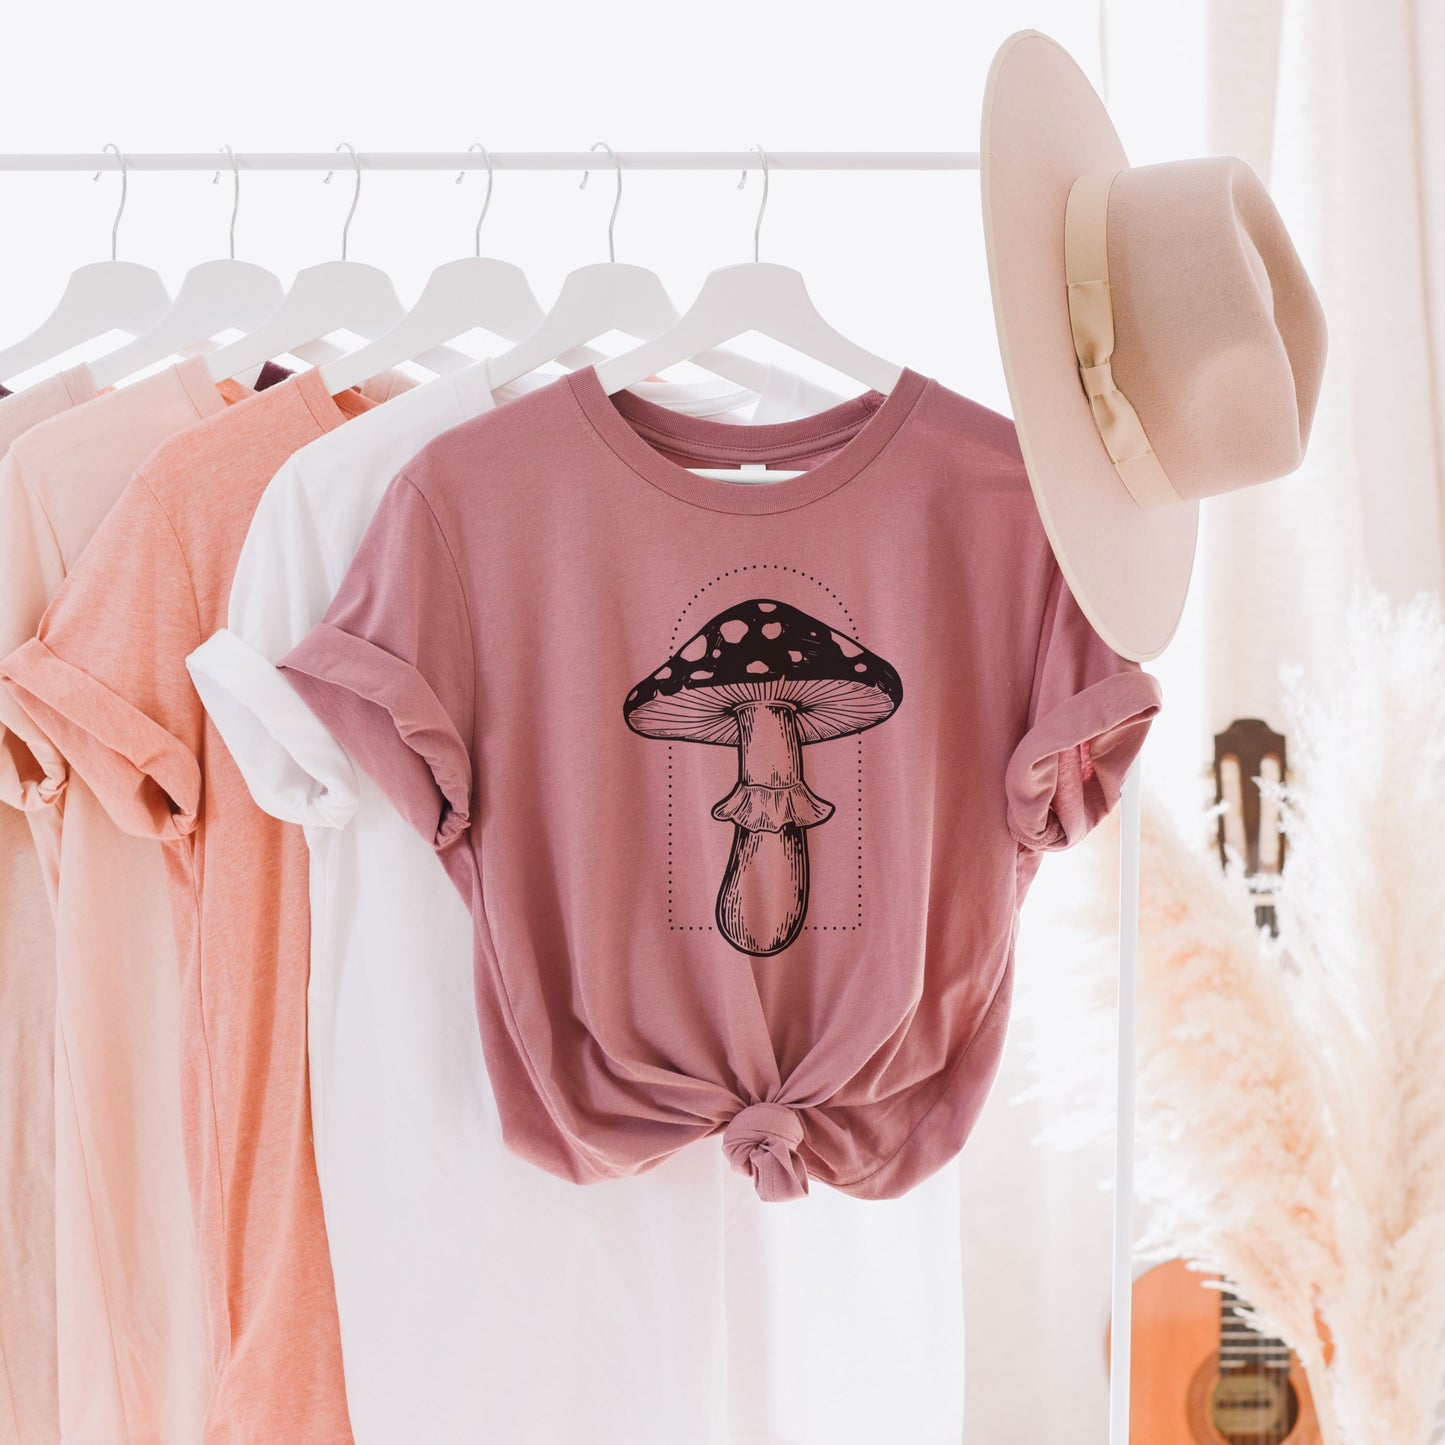 Amanita Mushroom Magic Shroom Shirt - Fractalista Designs